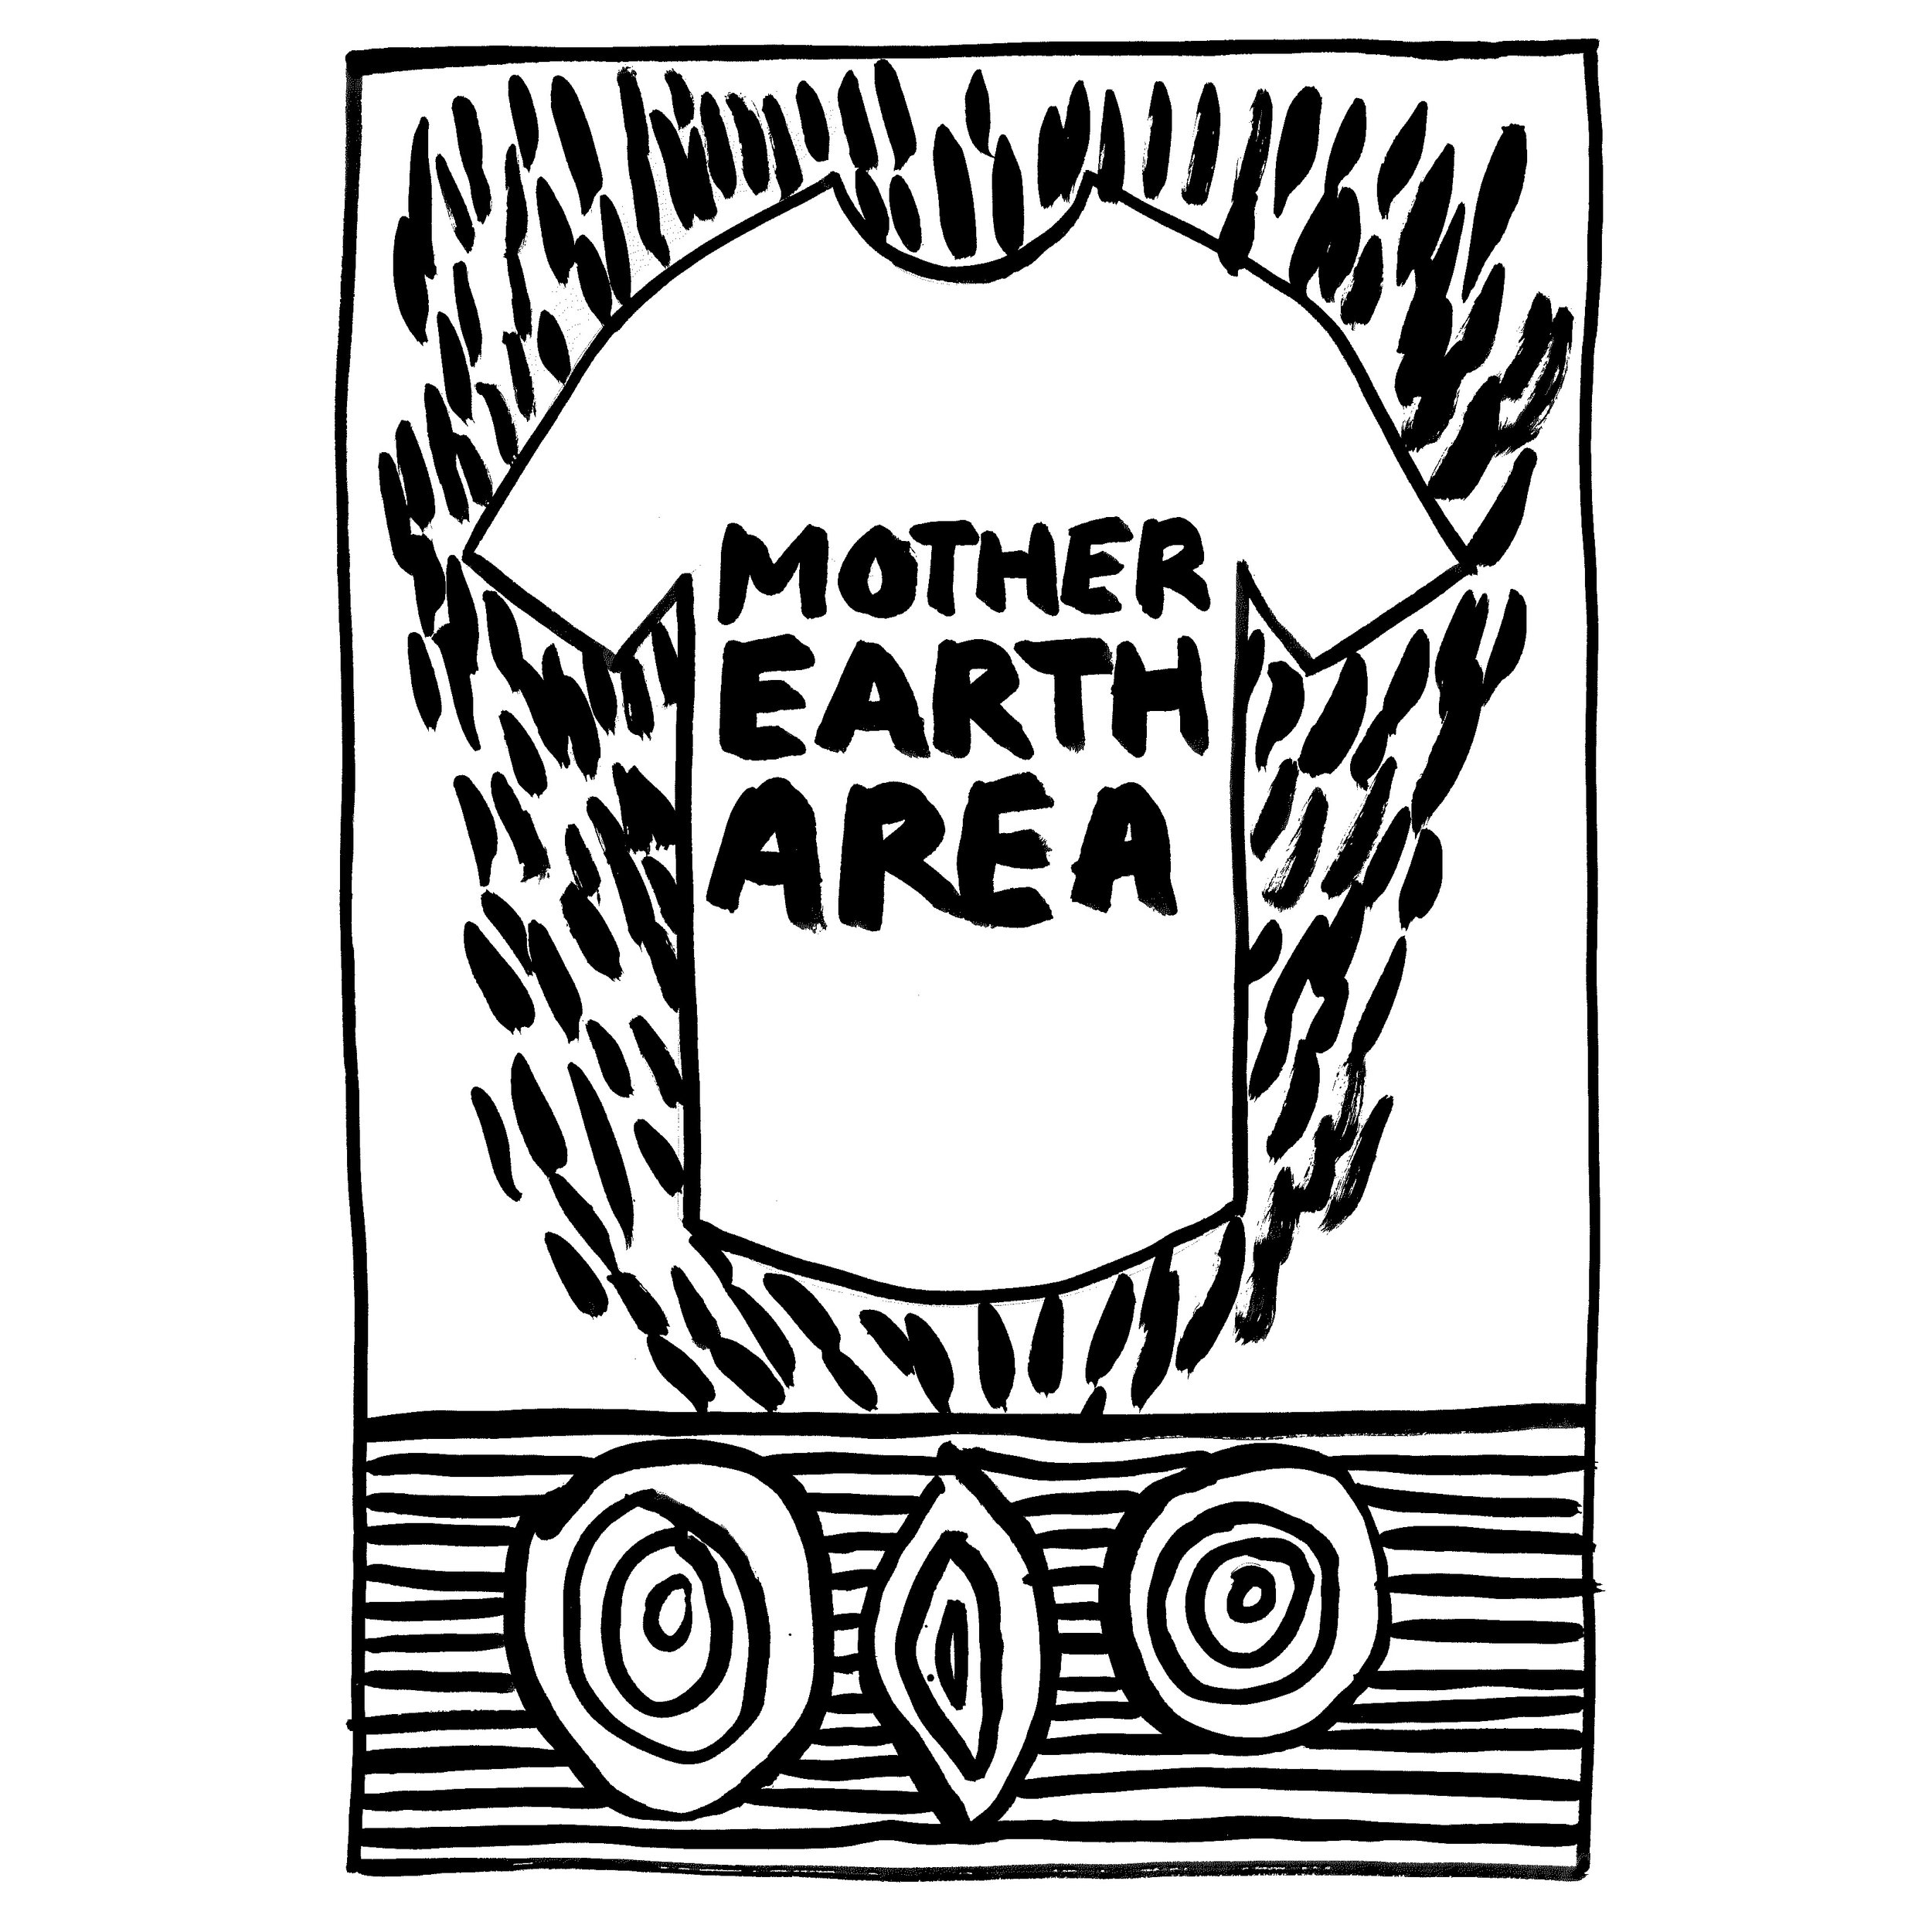 Mother Earth Area.jpg